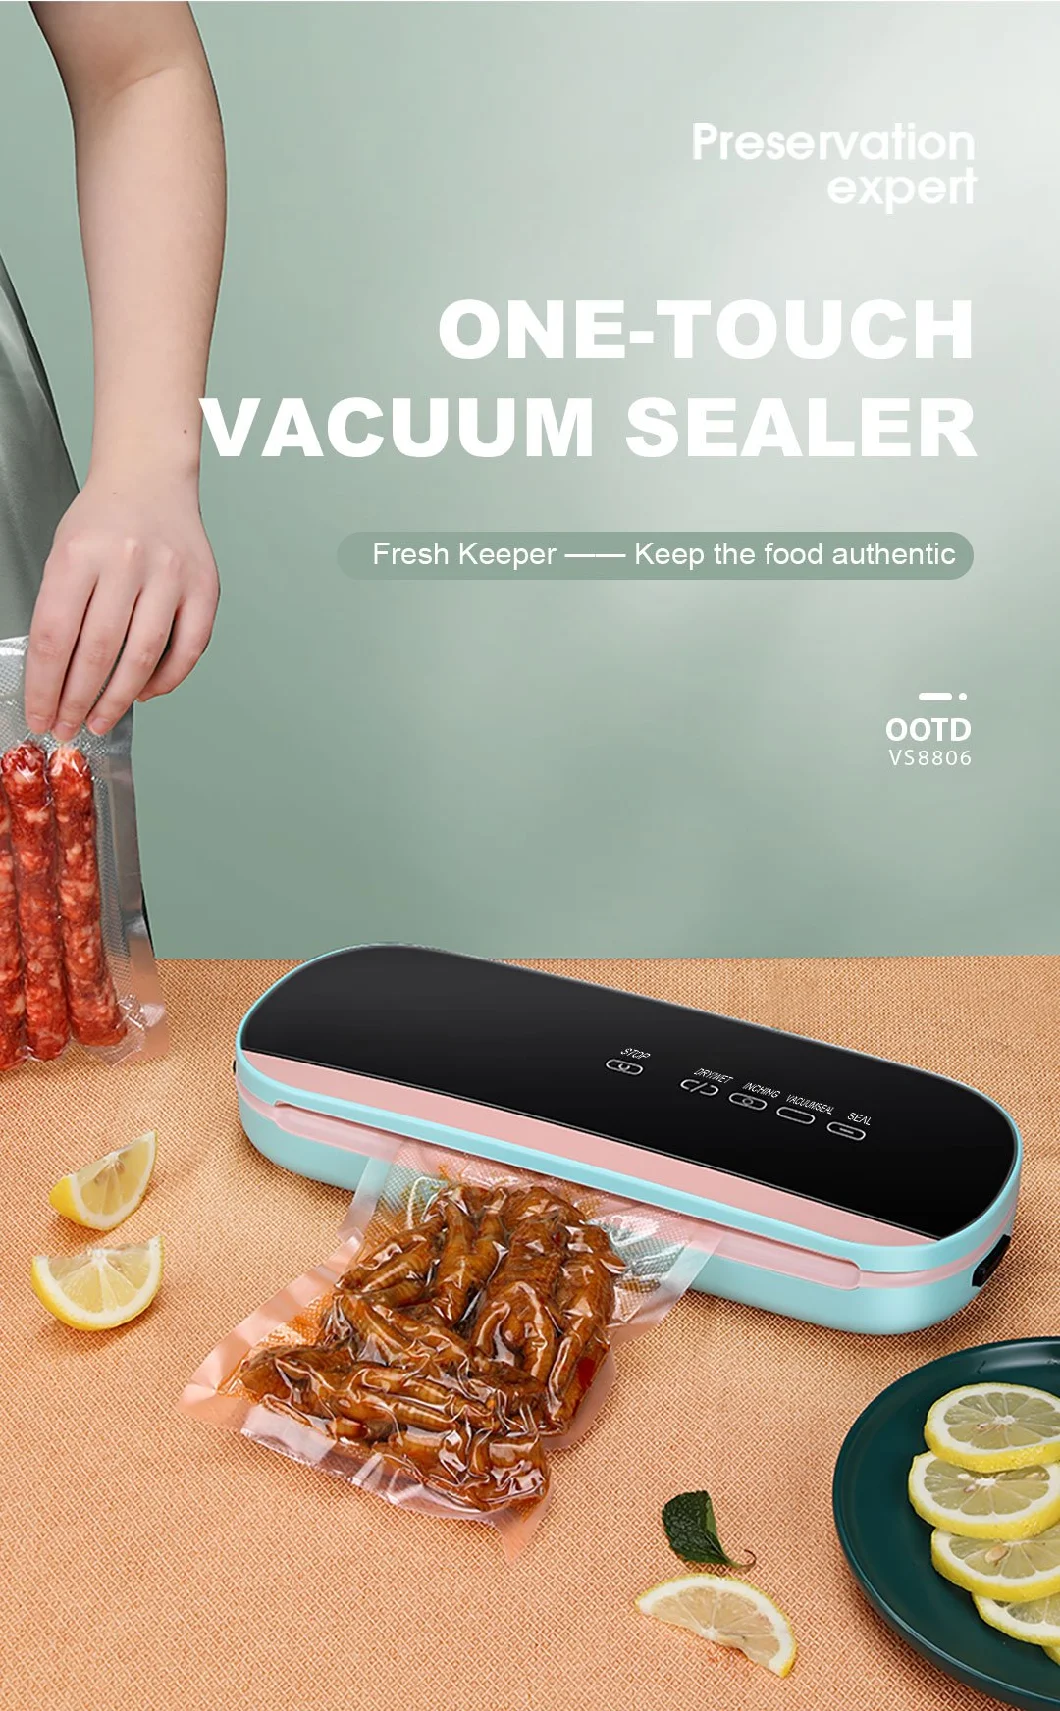 Ootd Household Vacuum Saver Machine for Food Fresh